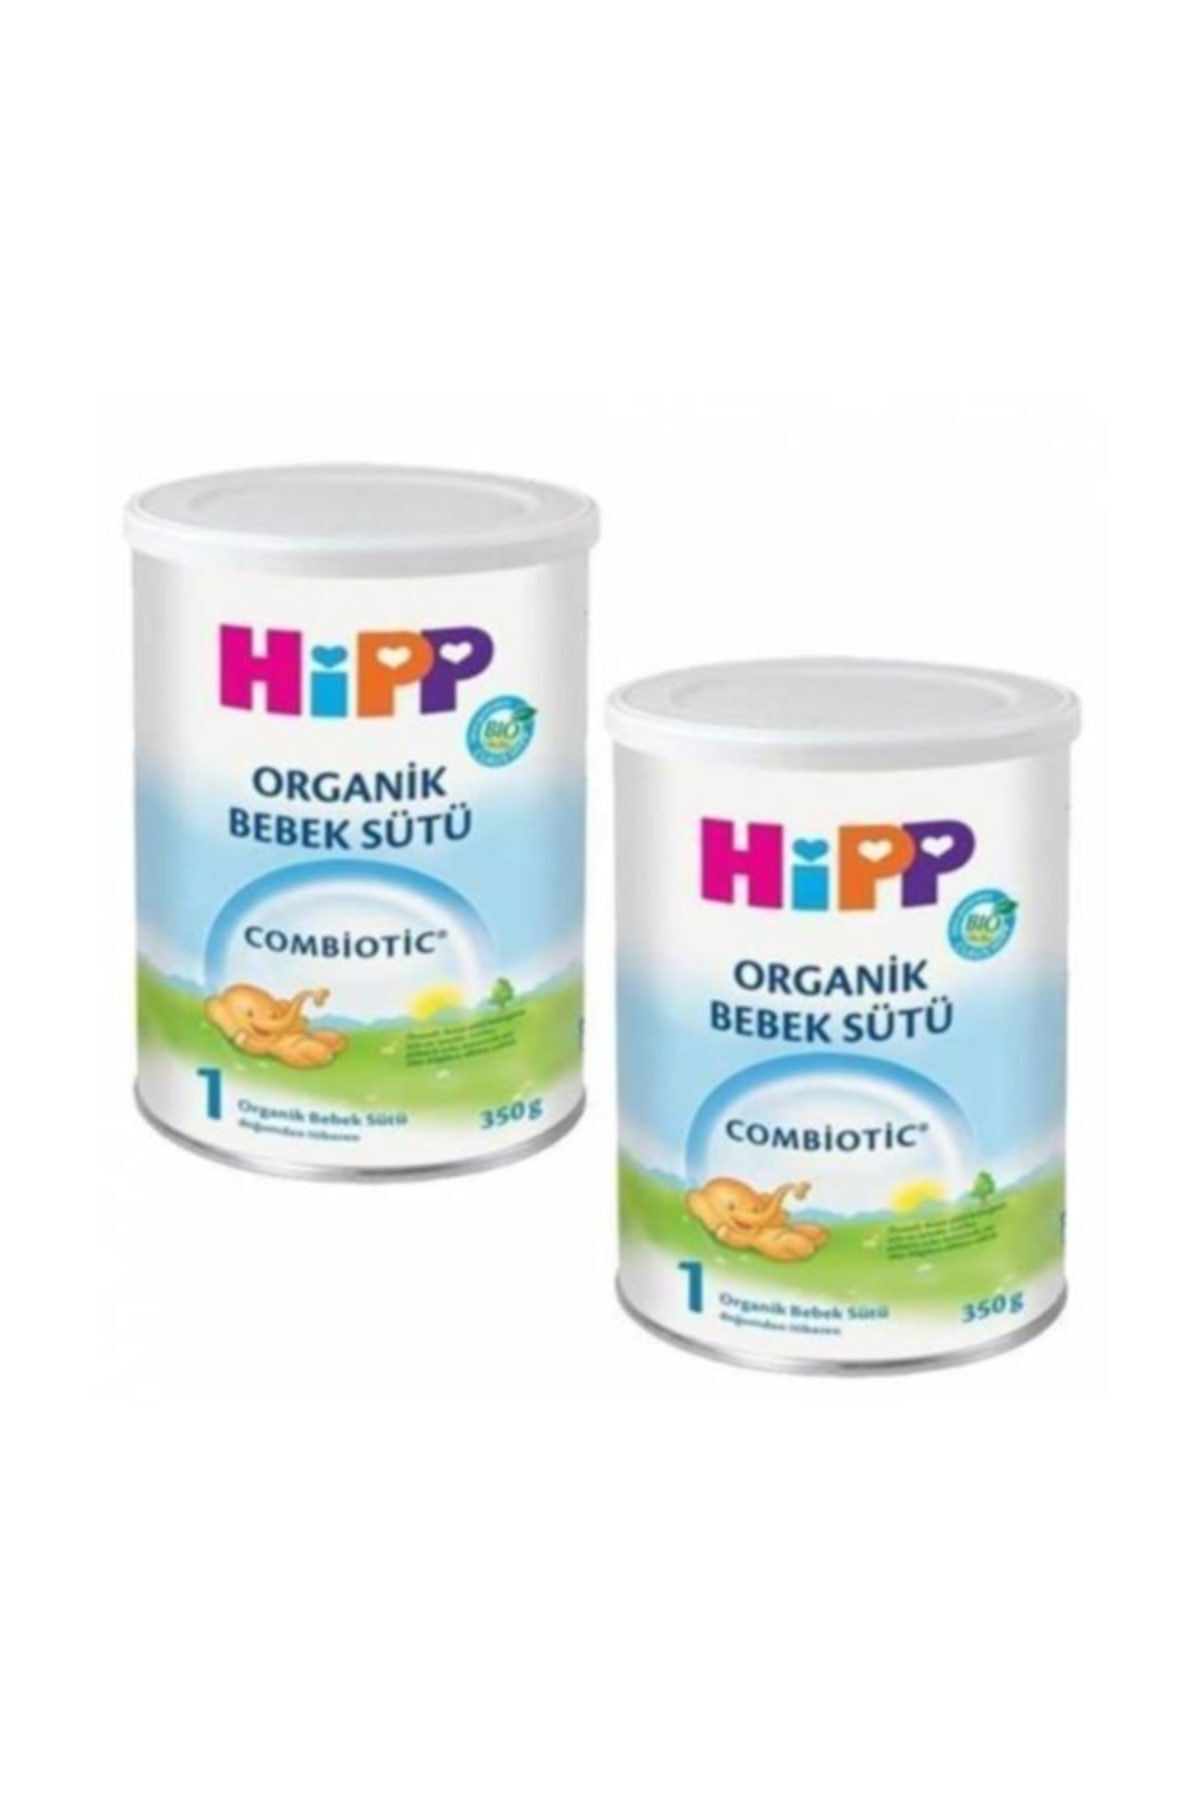 Hipp Organik Combiotic Bebek Sütü 1 Numara 350 gr x 2 Adet